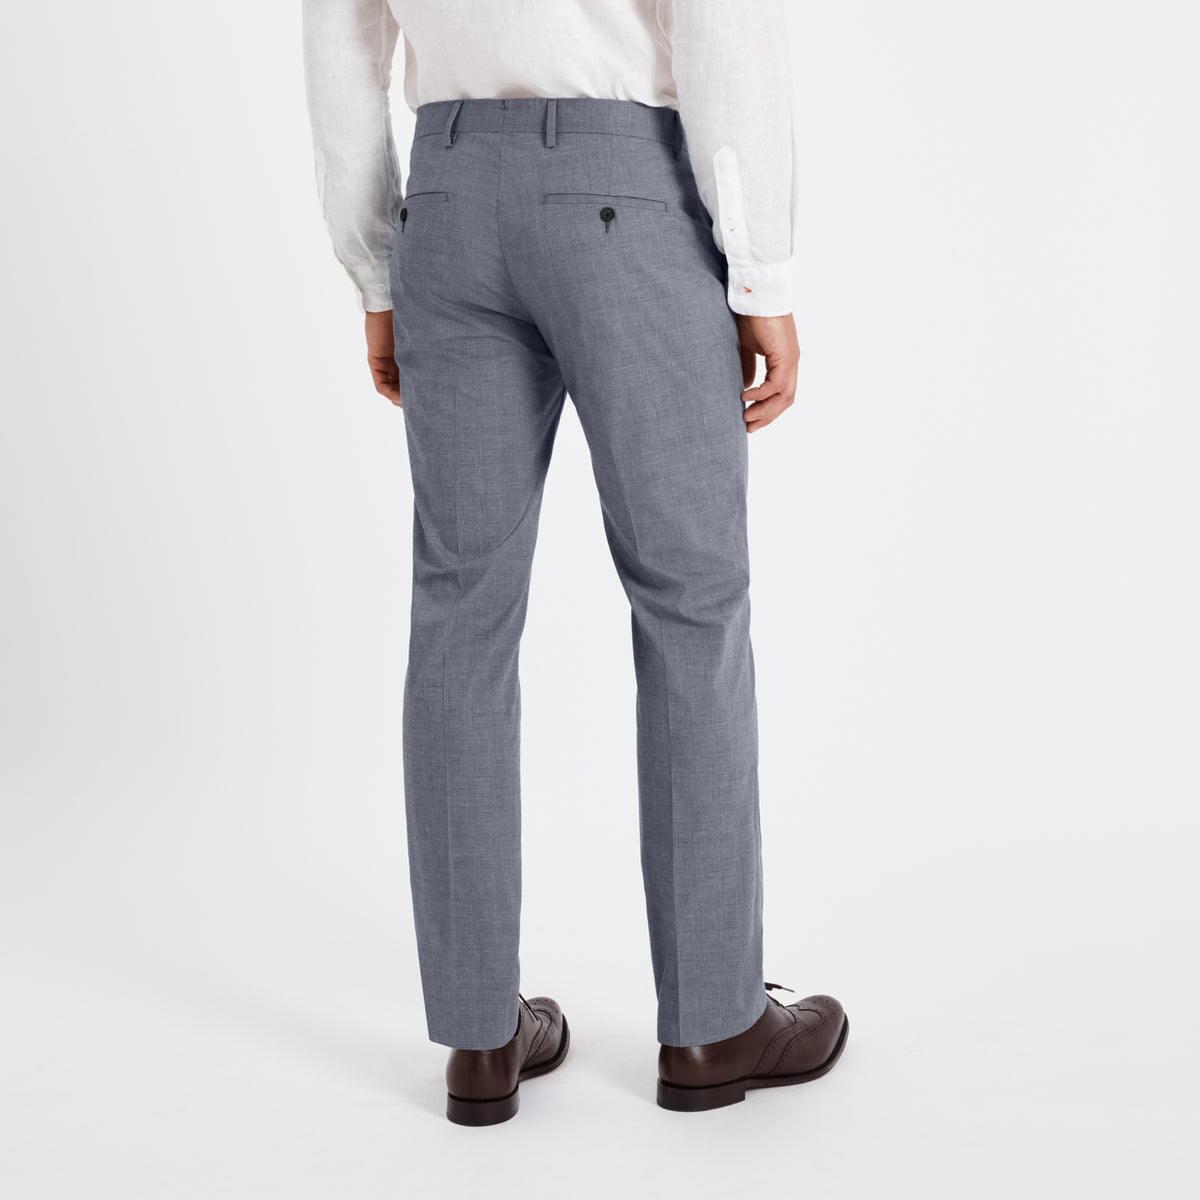 Navy Check - Everyday Men's Custom Fit Chino Pants - SPOKE - SPOKE